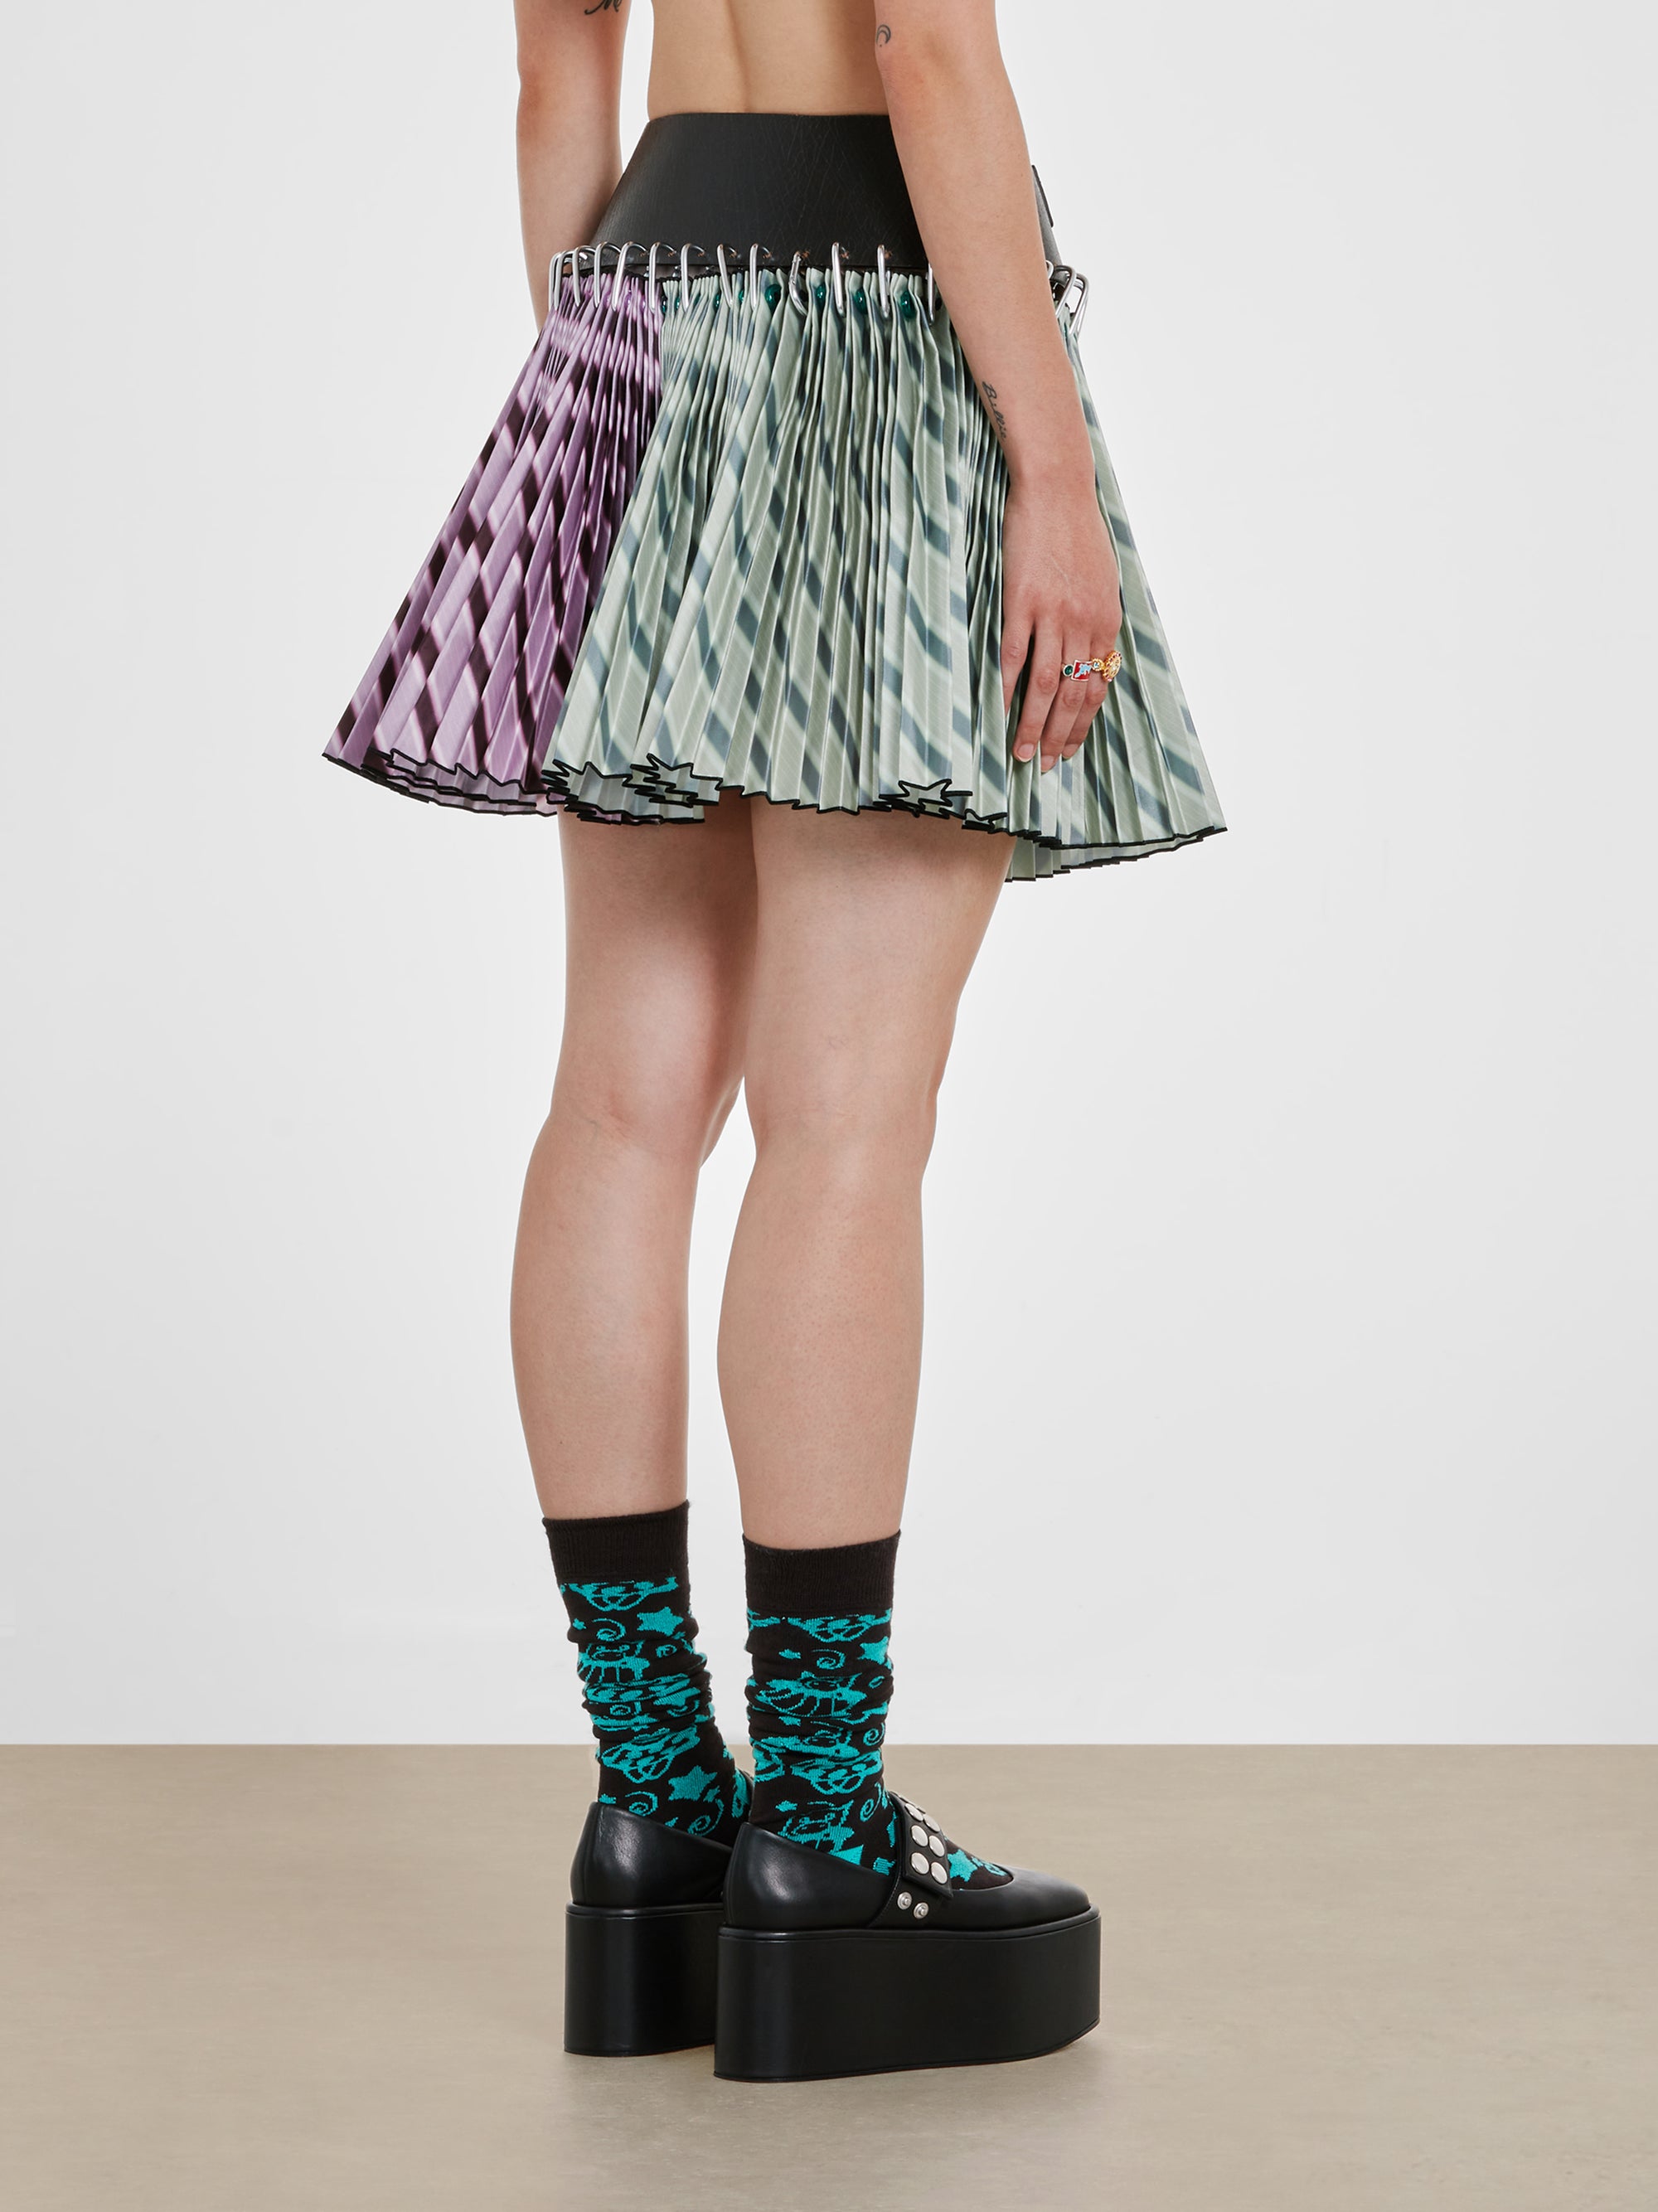 Chopova Lowena - Women’s Chamonix Mini Carabiner Skirt - (Mix Stripe) view 3